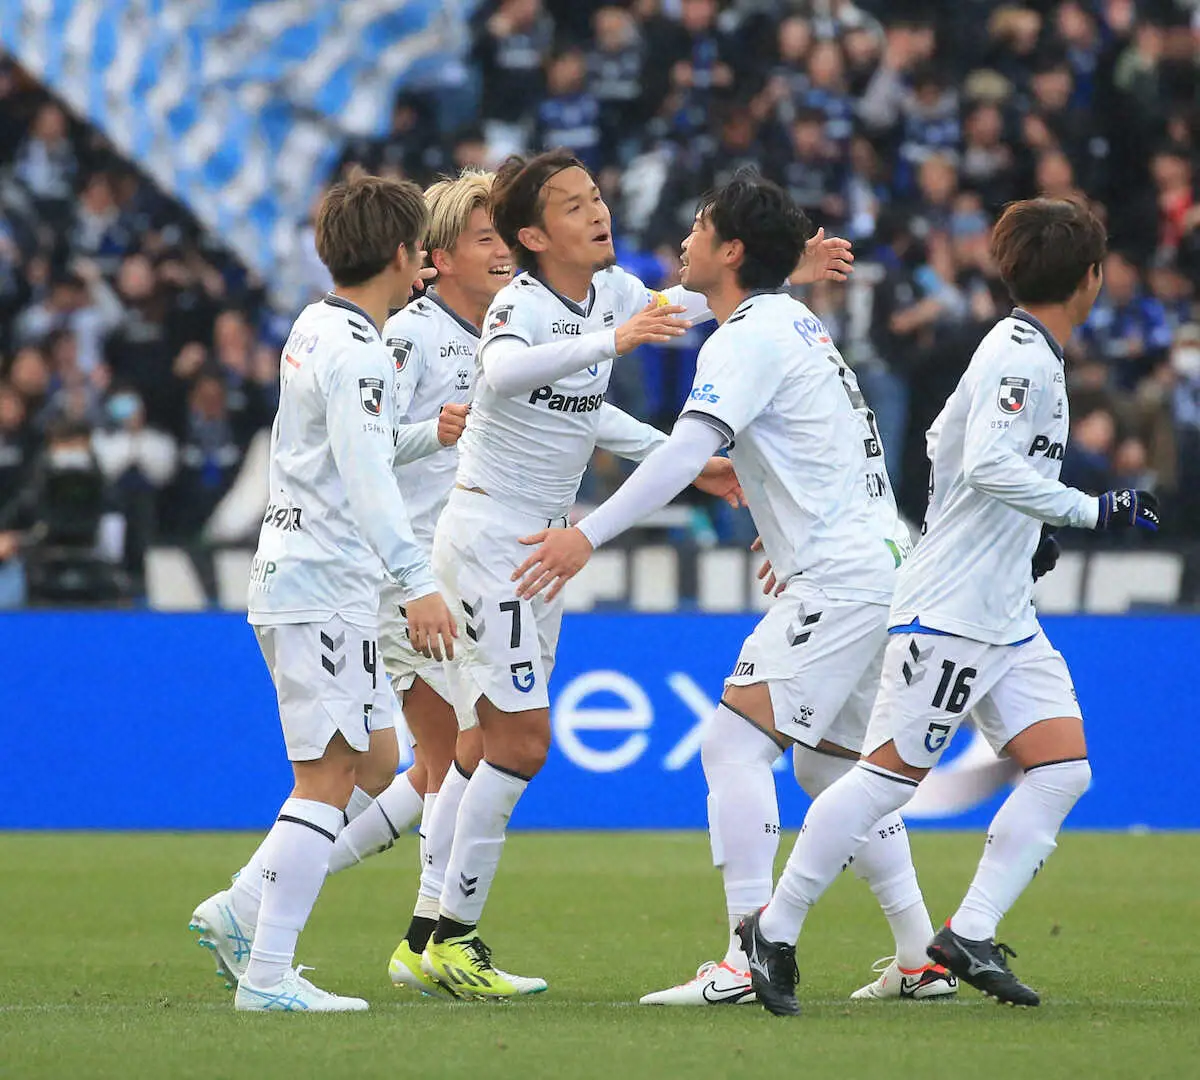 G大阪は宇佐美の芸術FK弾で昨季からの7連敗を止める